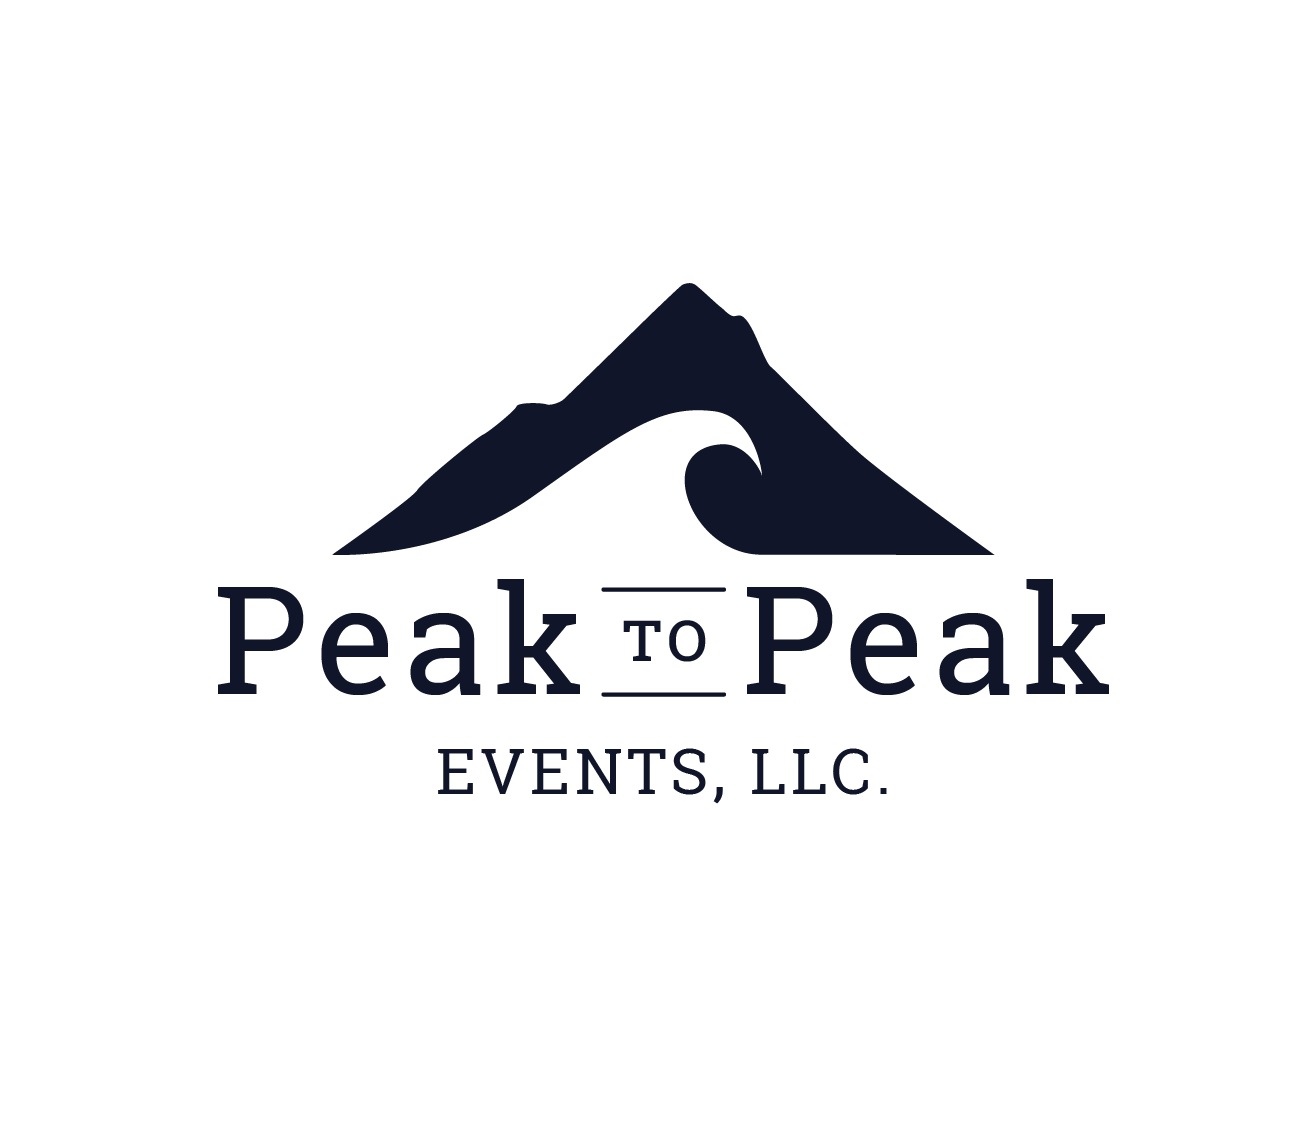 Peak to Peak Events